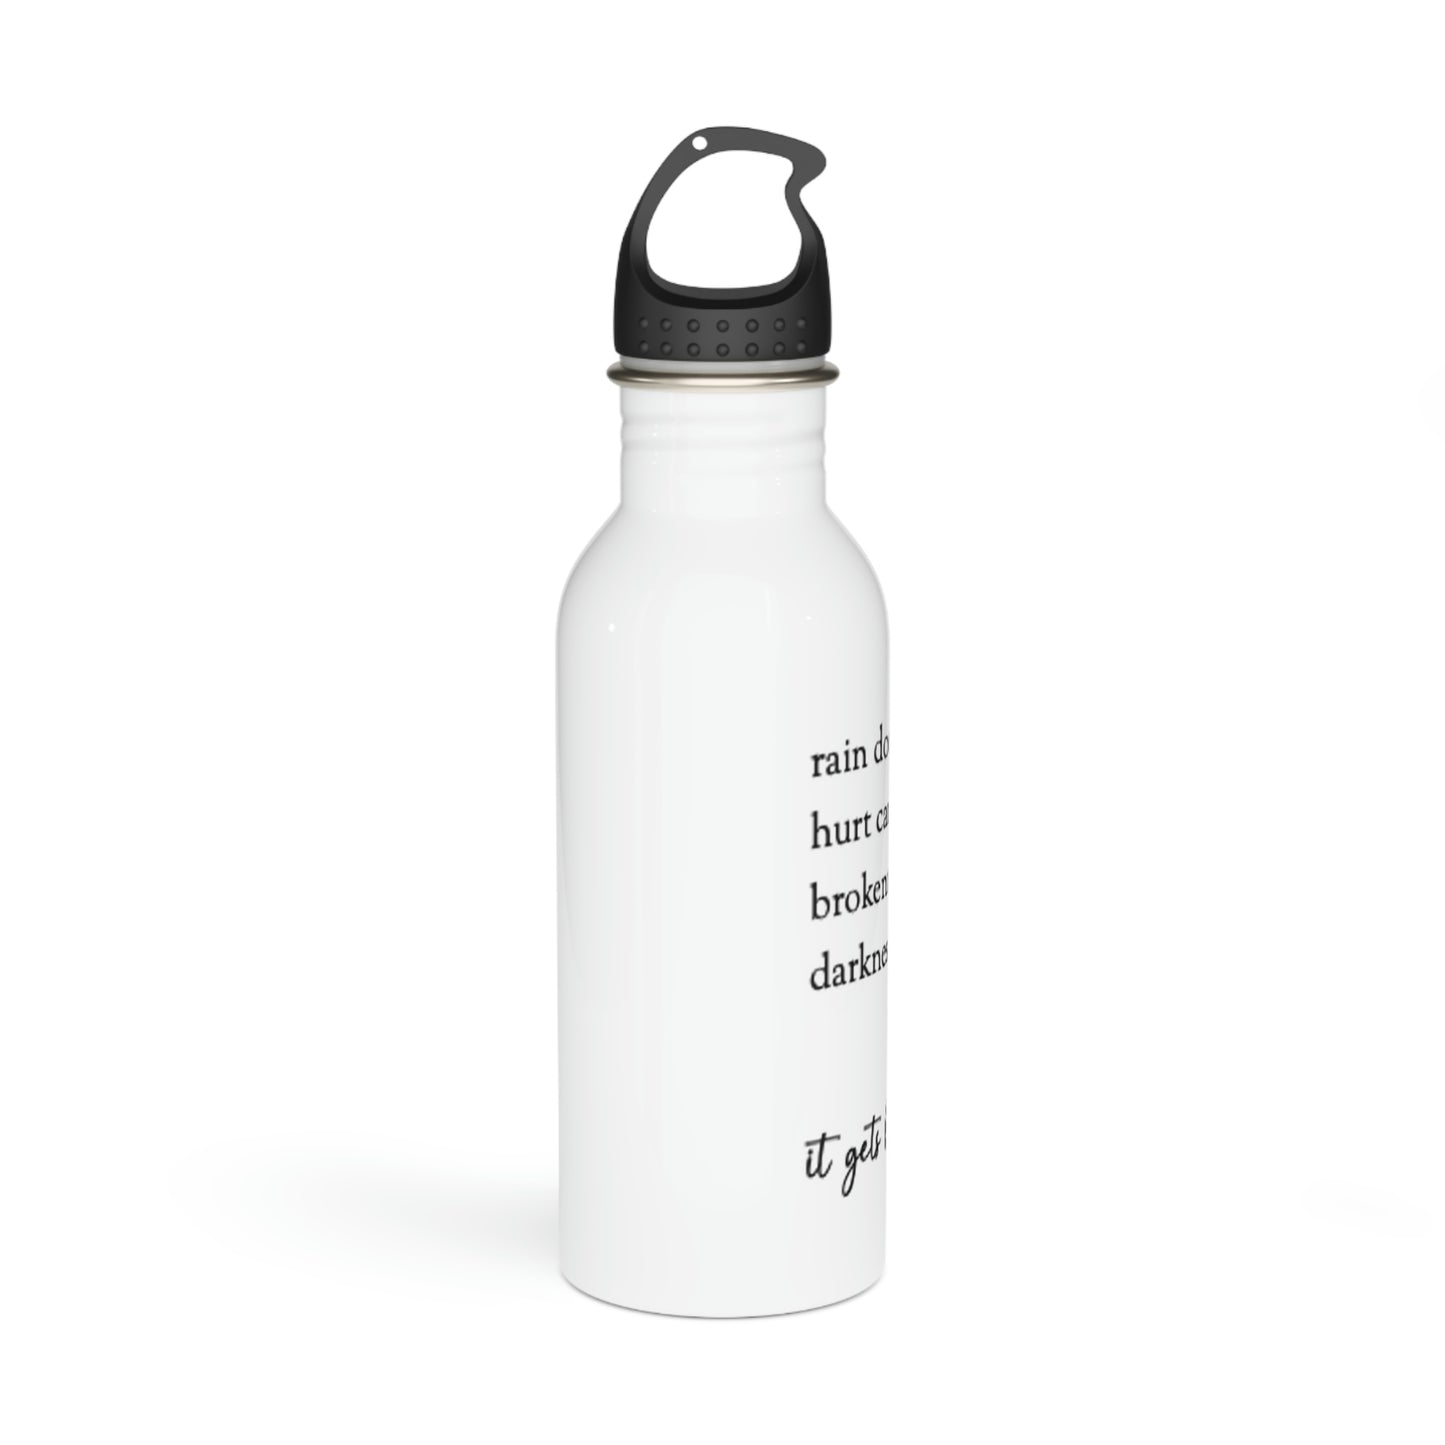 "It Gets Better" Stainless Steel Water Bottle